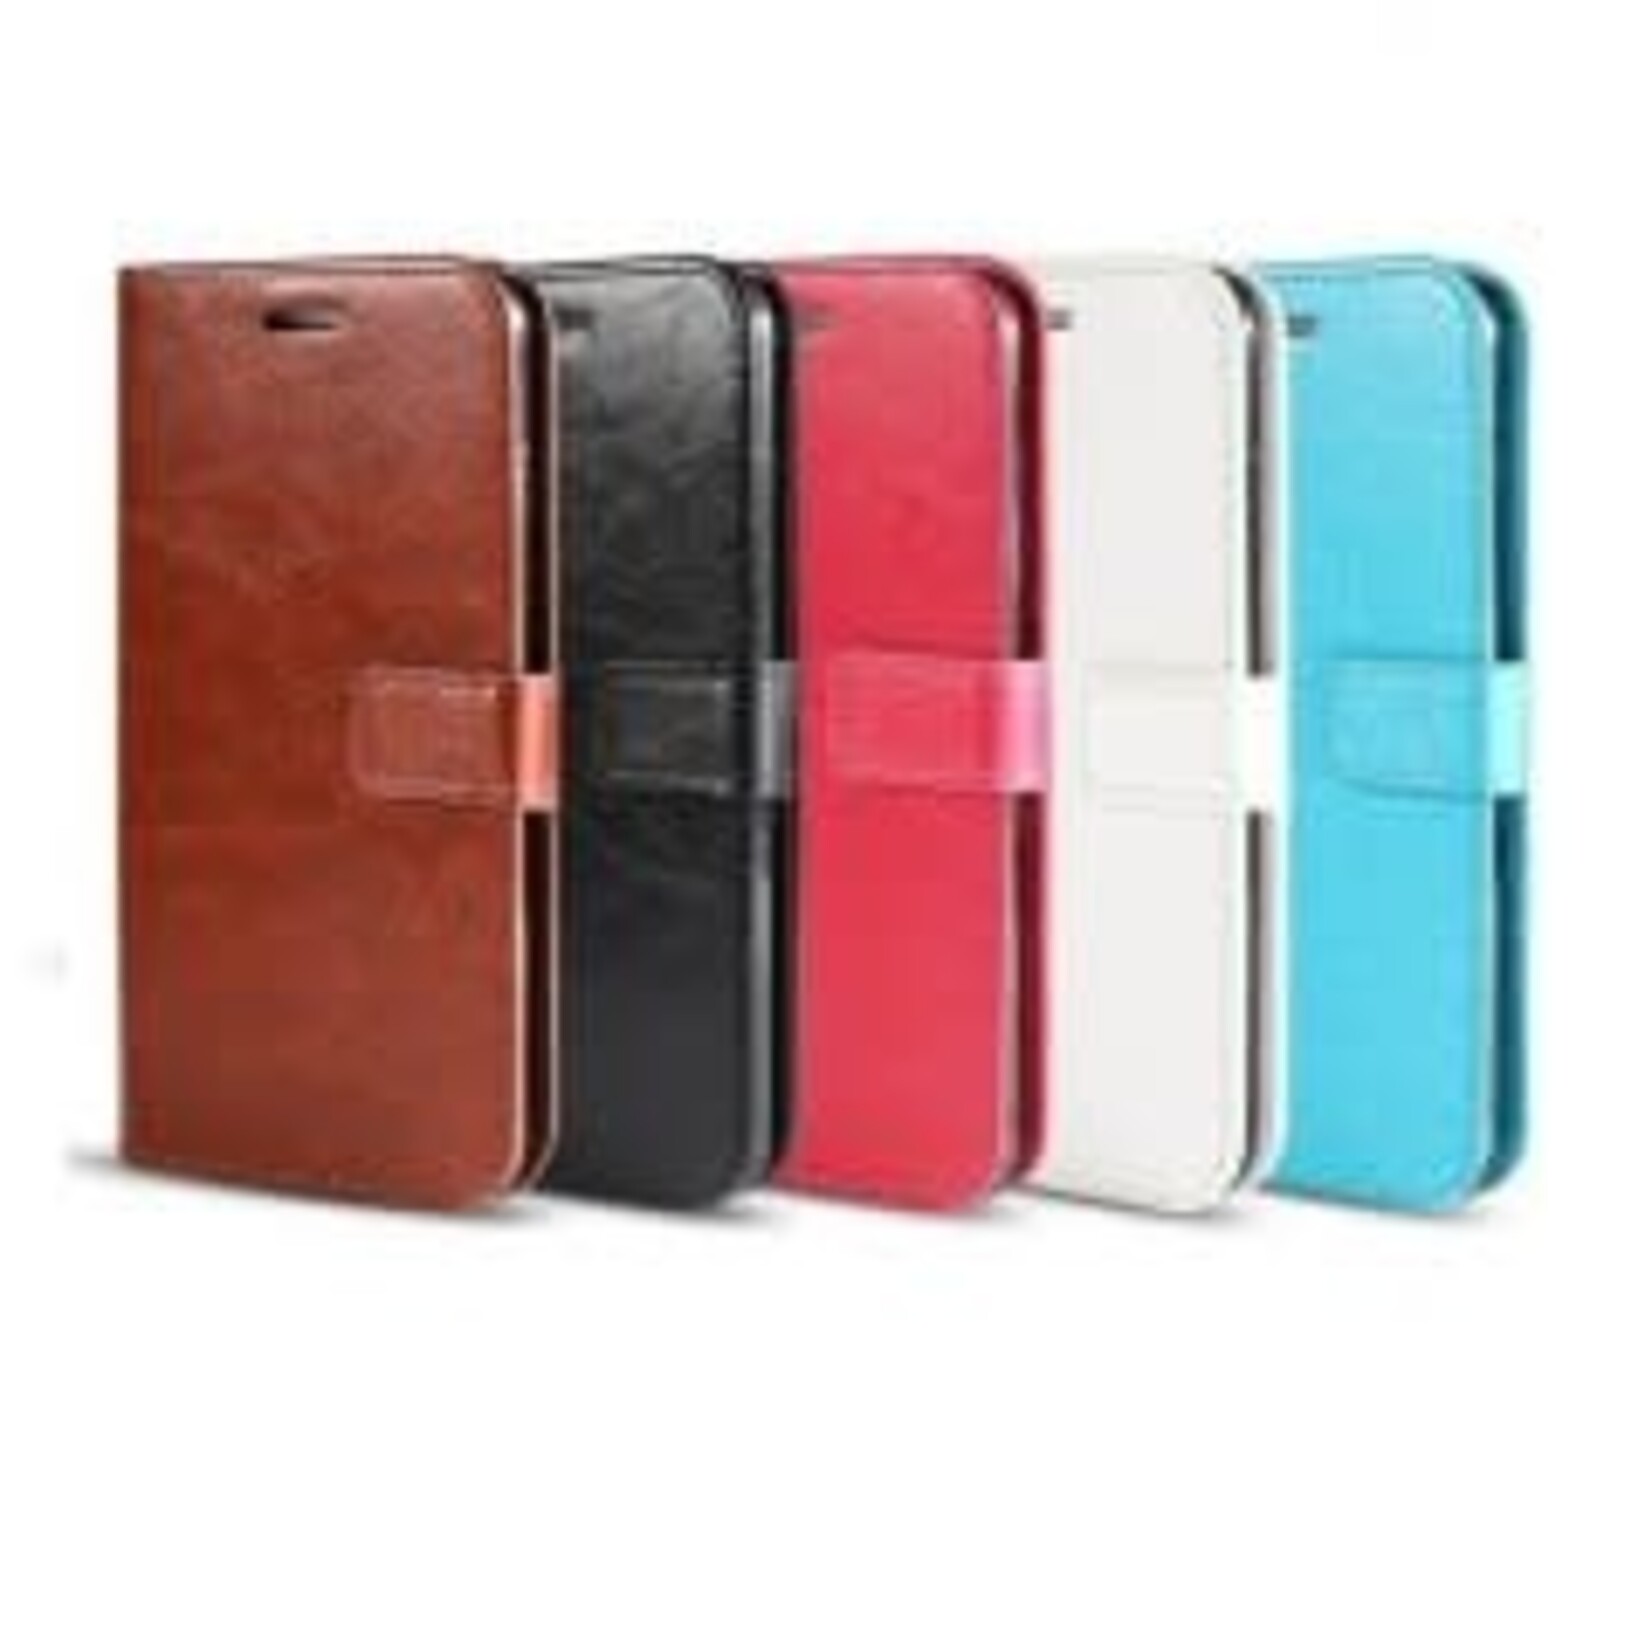 Samsung ÉTUI SAMSUNG S21 FE - Book Style Wallet